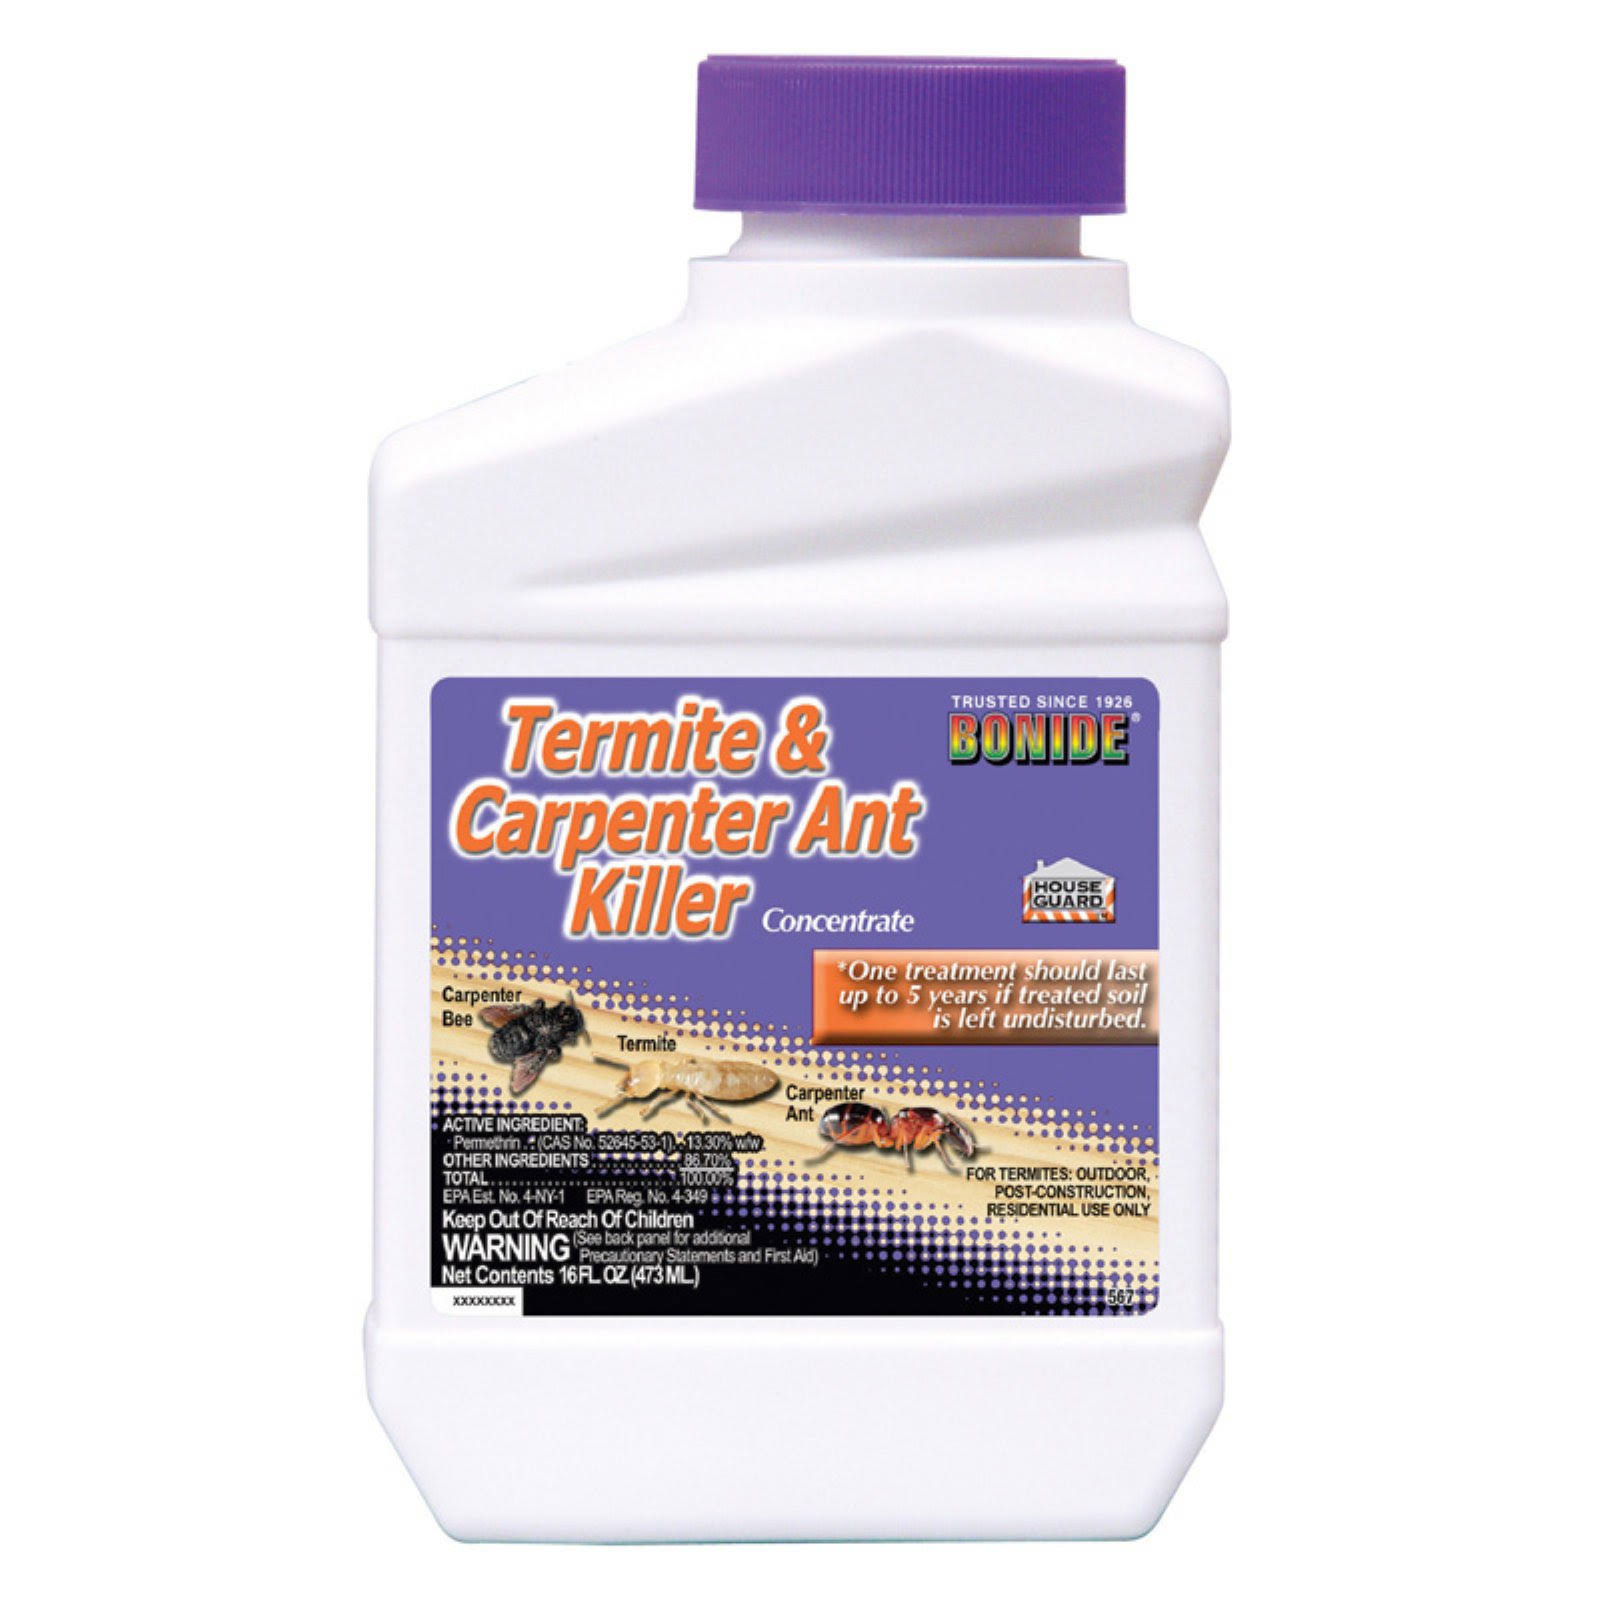 Bonide Termite and Carpenter Ant Killer Concentrate - 1pt